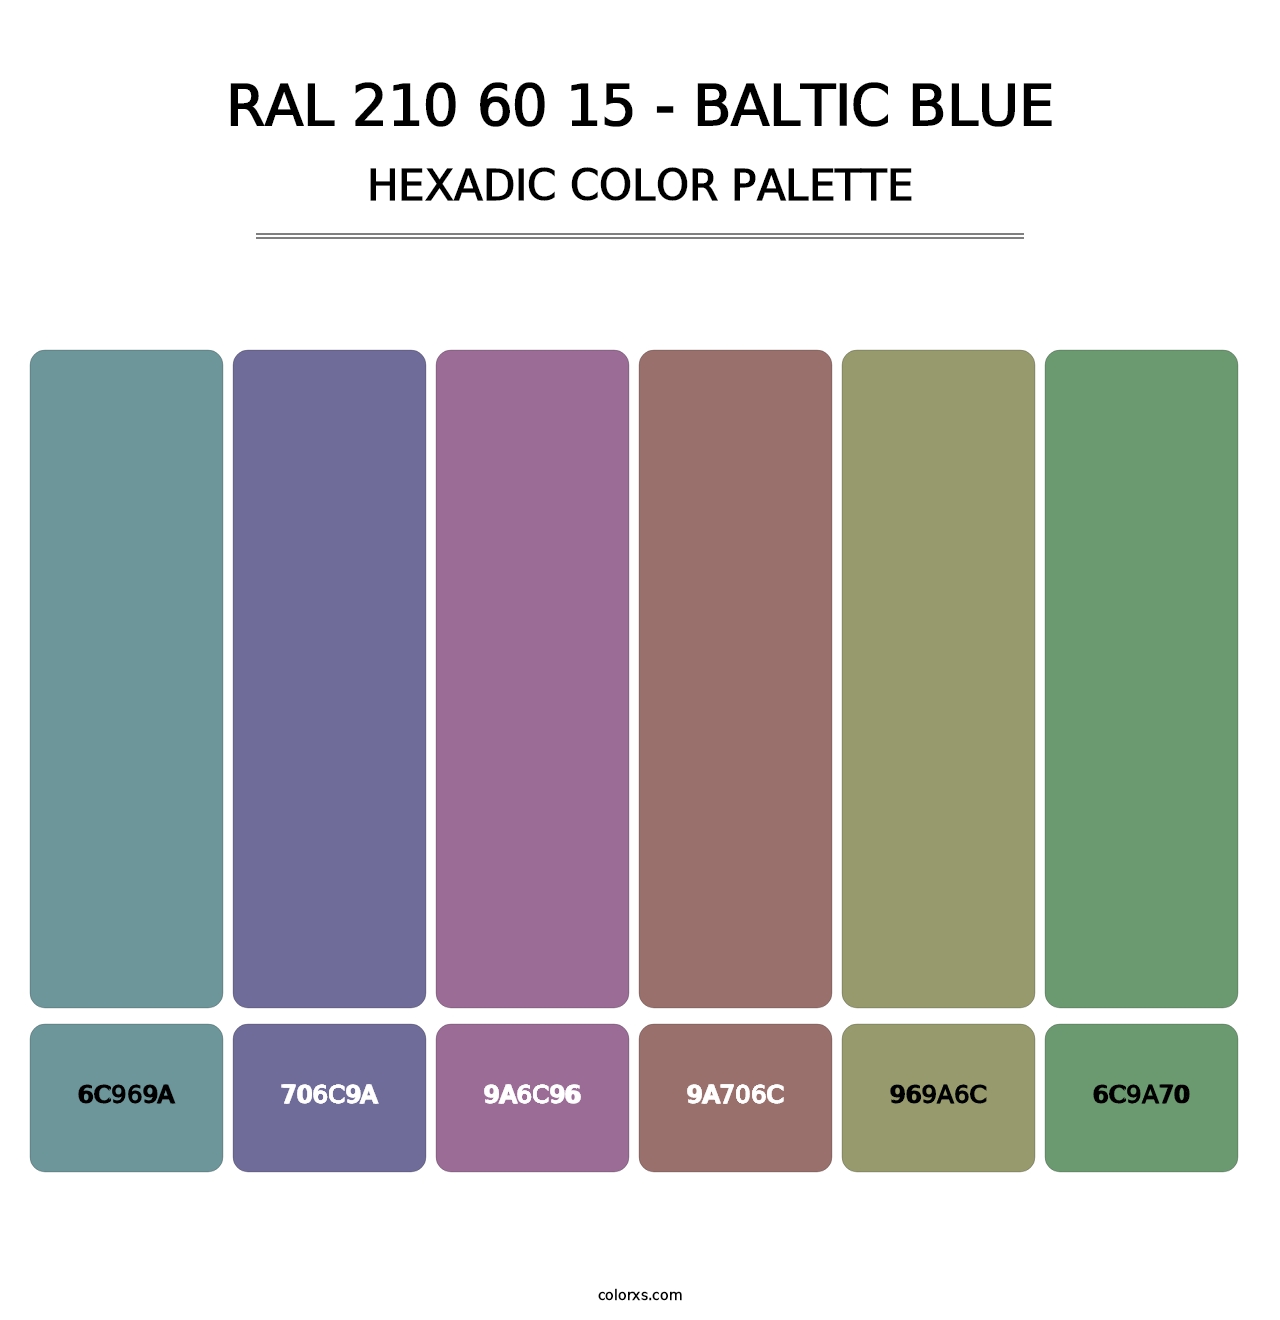 RAL 210 60 15 - Baltic Blue - Hexadic Color Palette